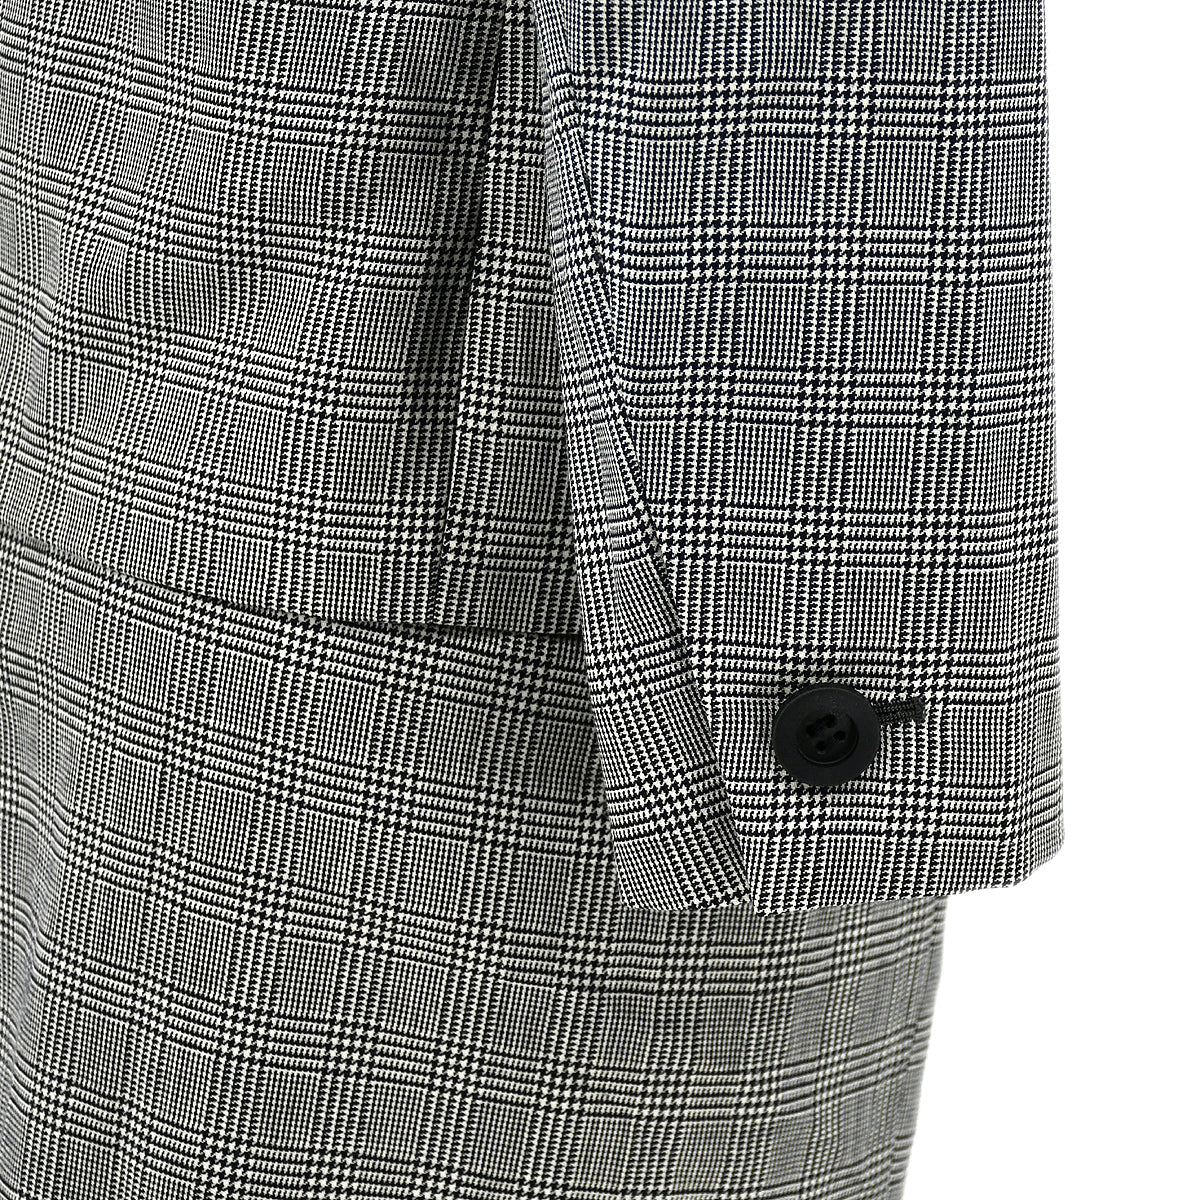 Yves Saint Laurent Setup Suit Jacket Skirt Gray 